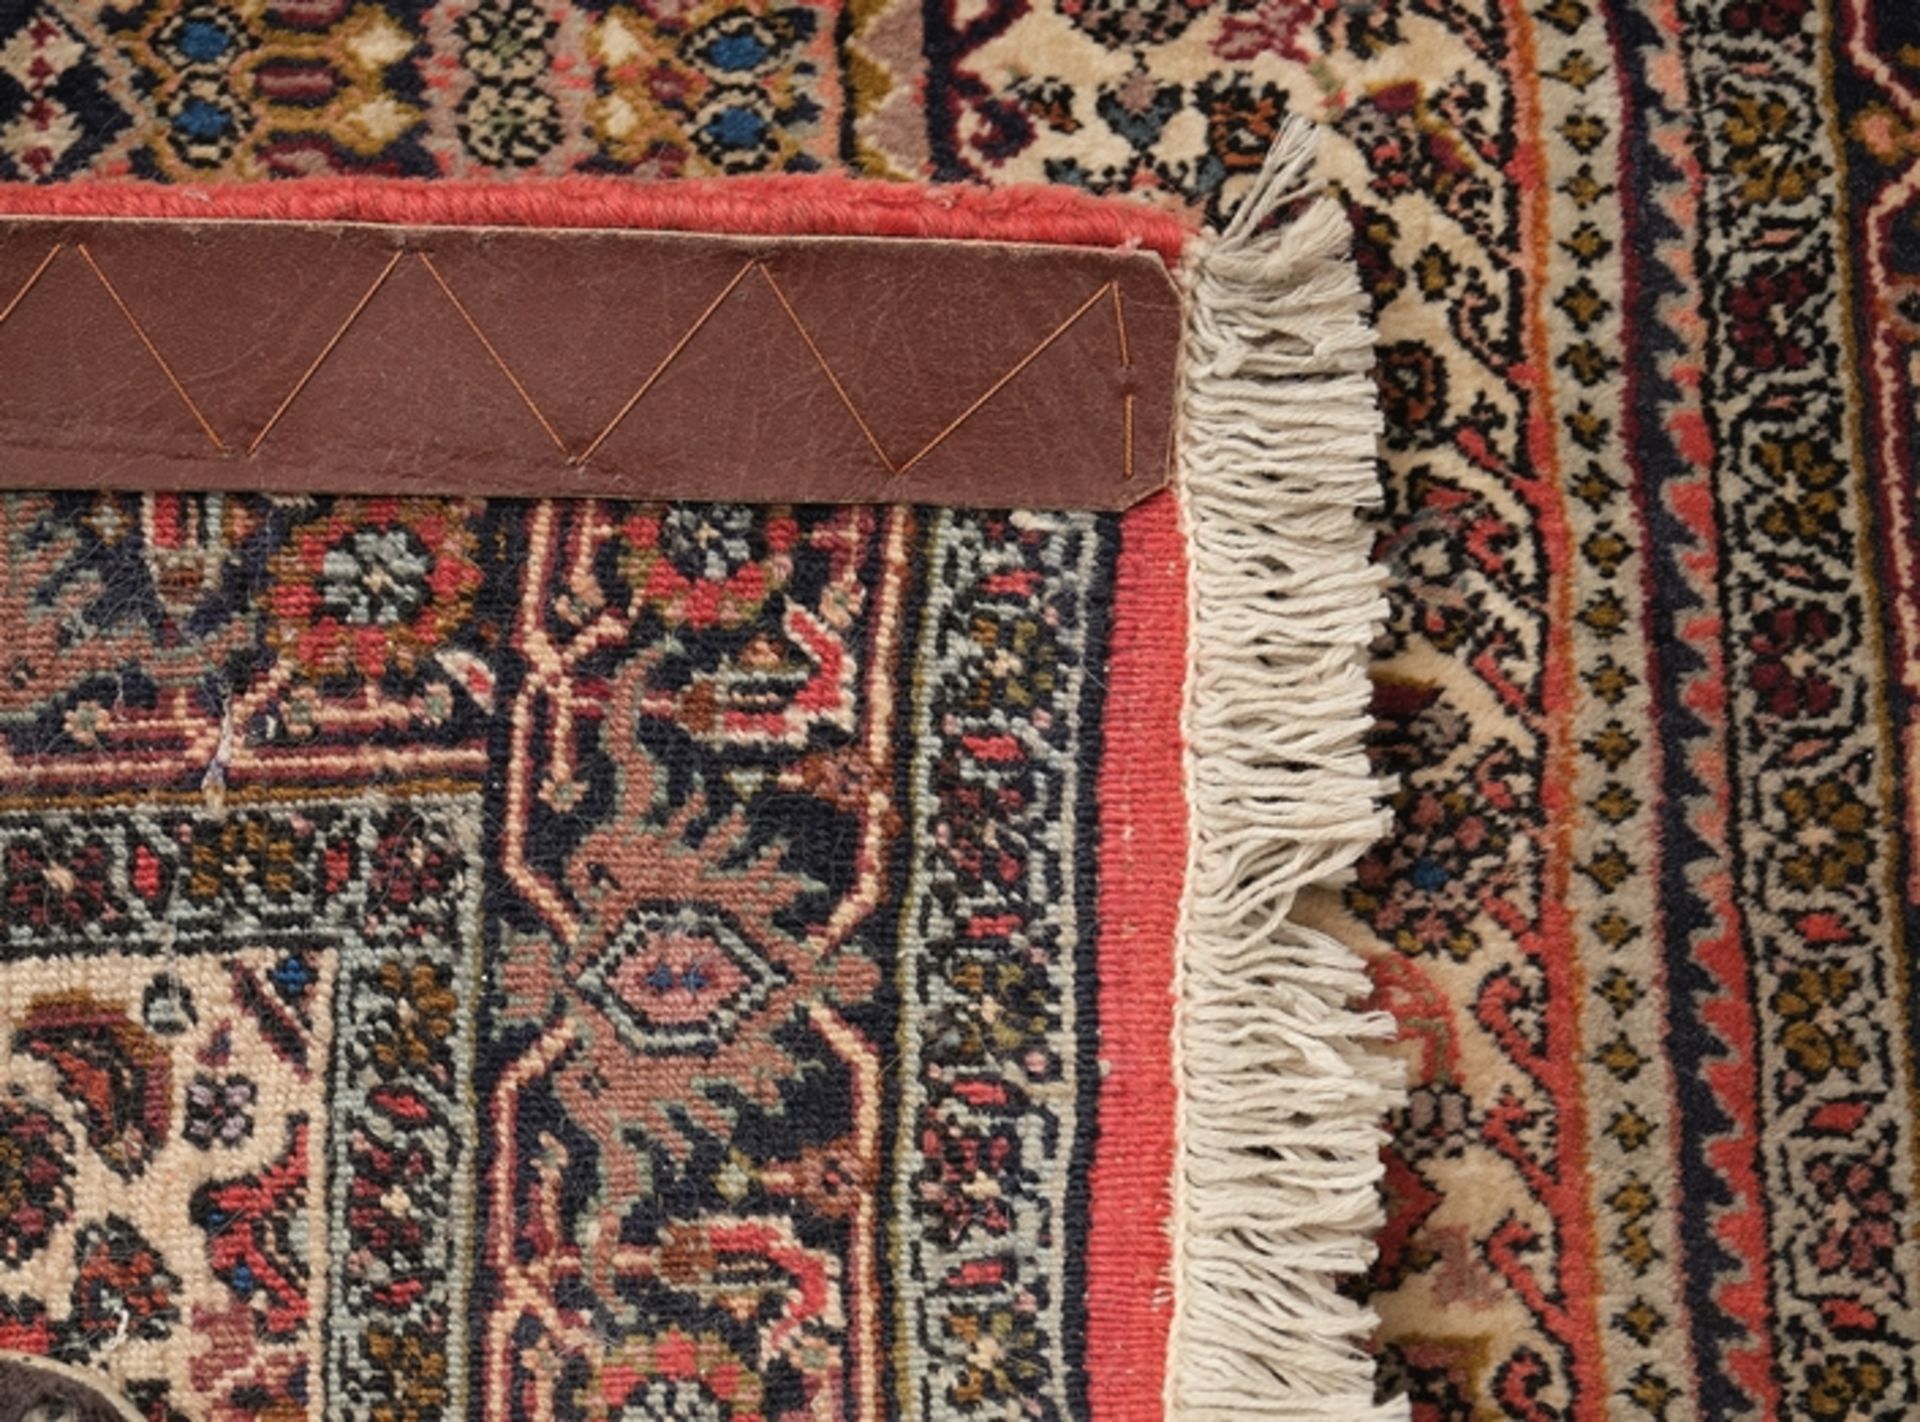 Herati bidjar, Iran, very fine weave, approx. 2.48 x 0.74 m - Image 2 of 2